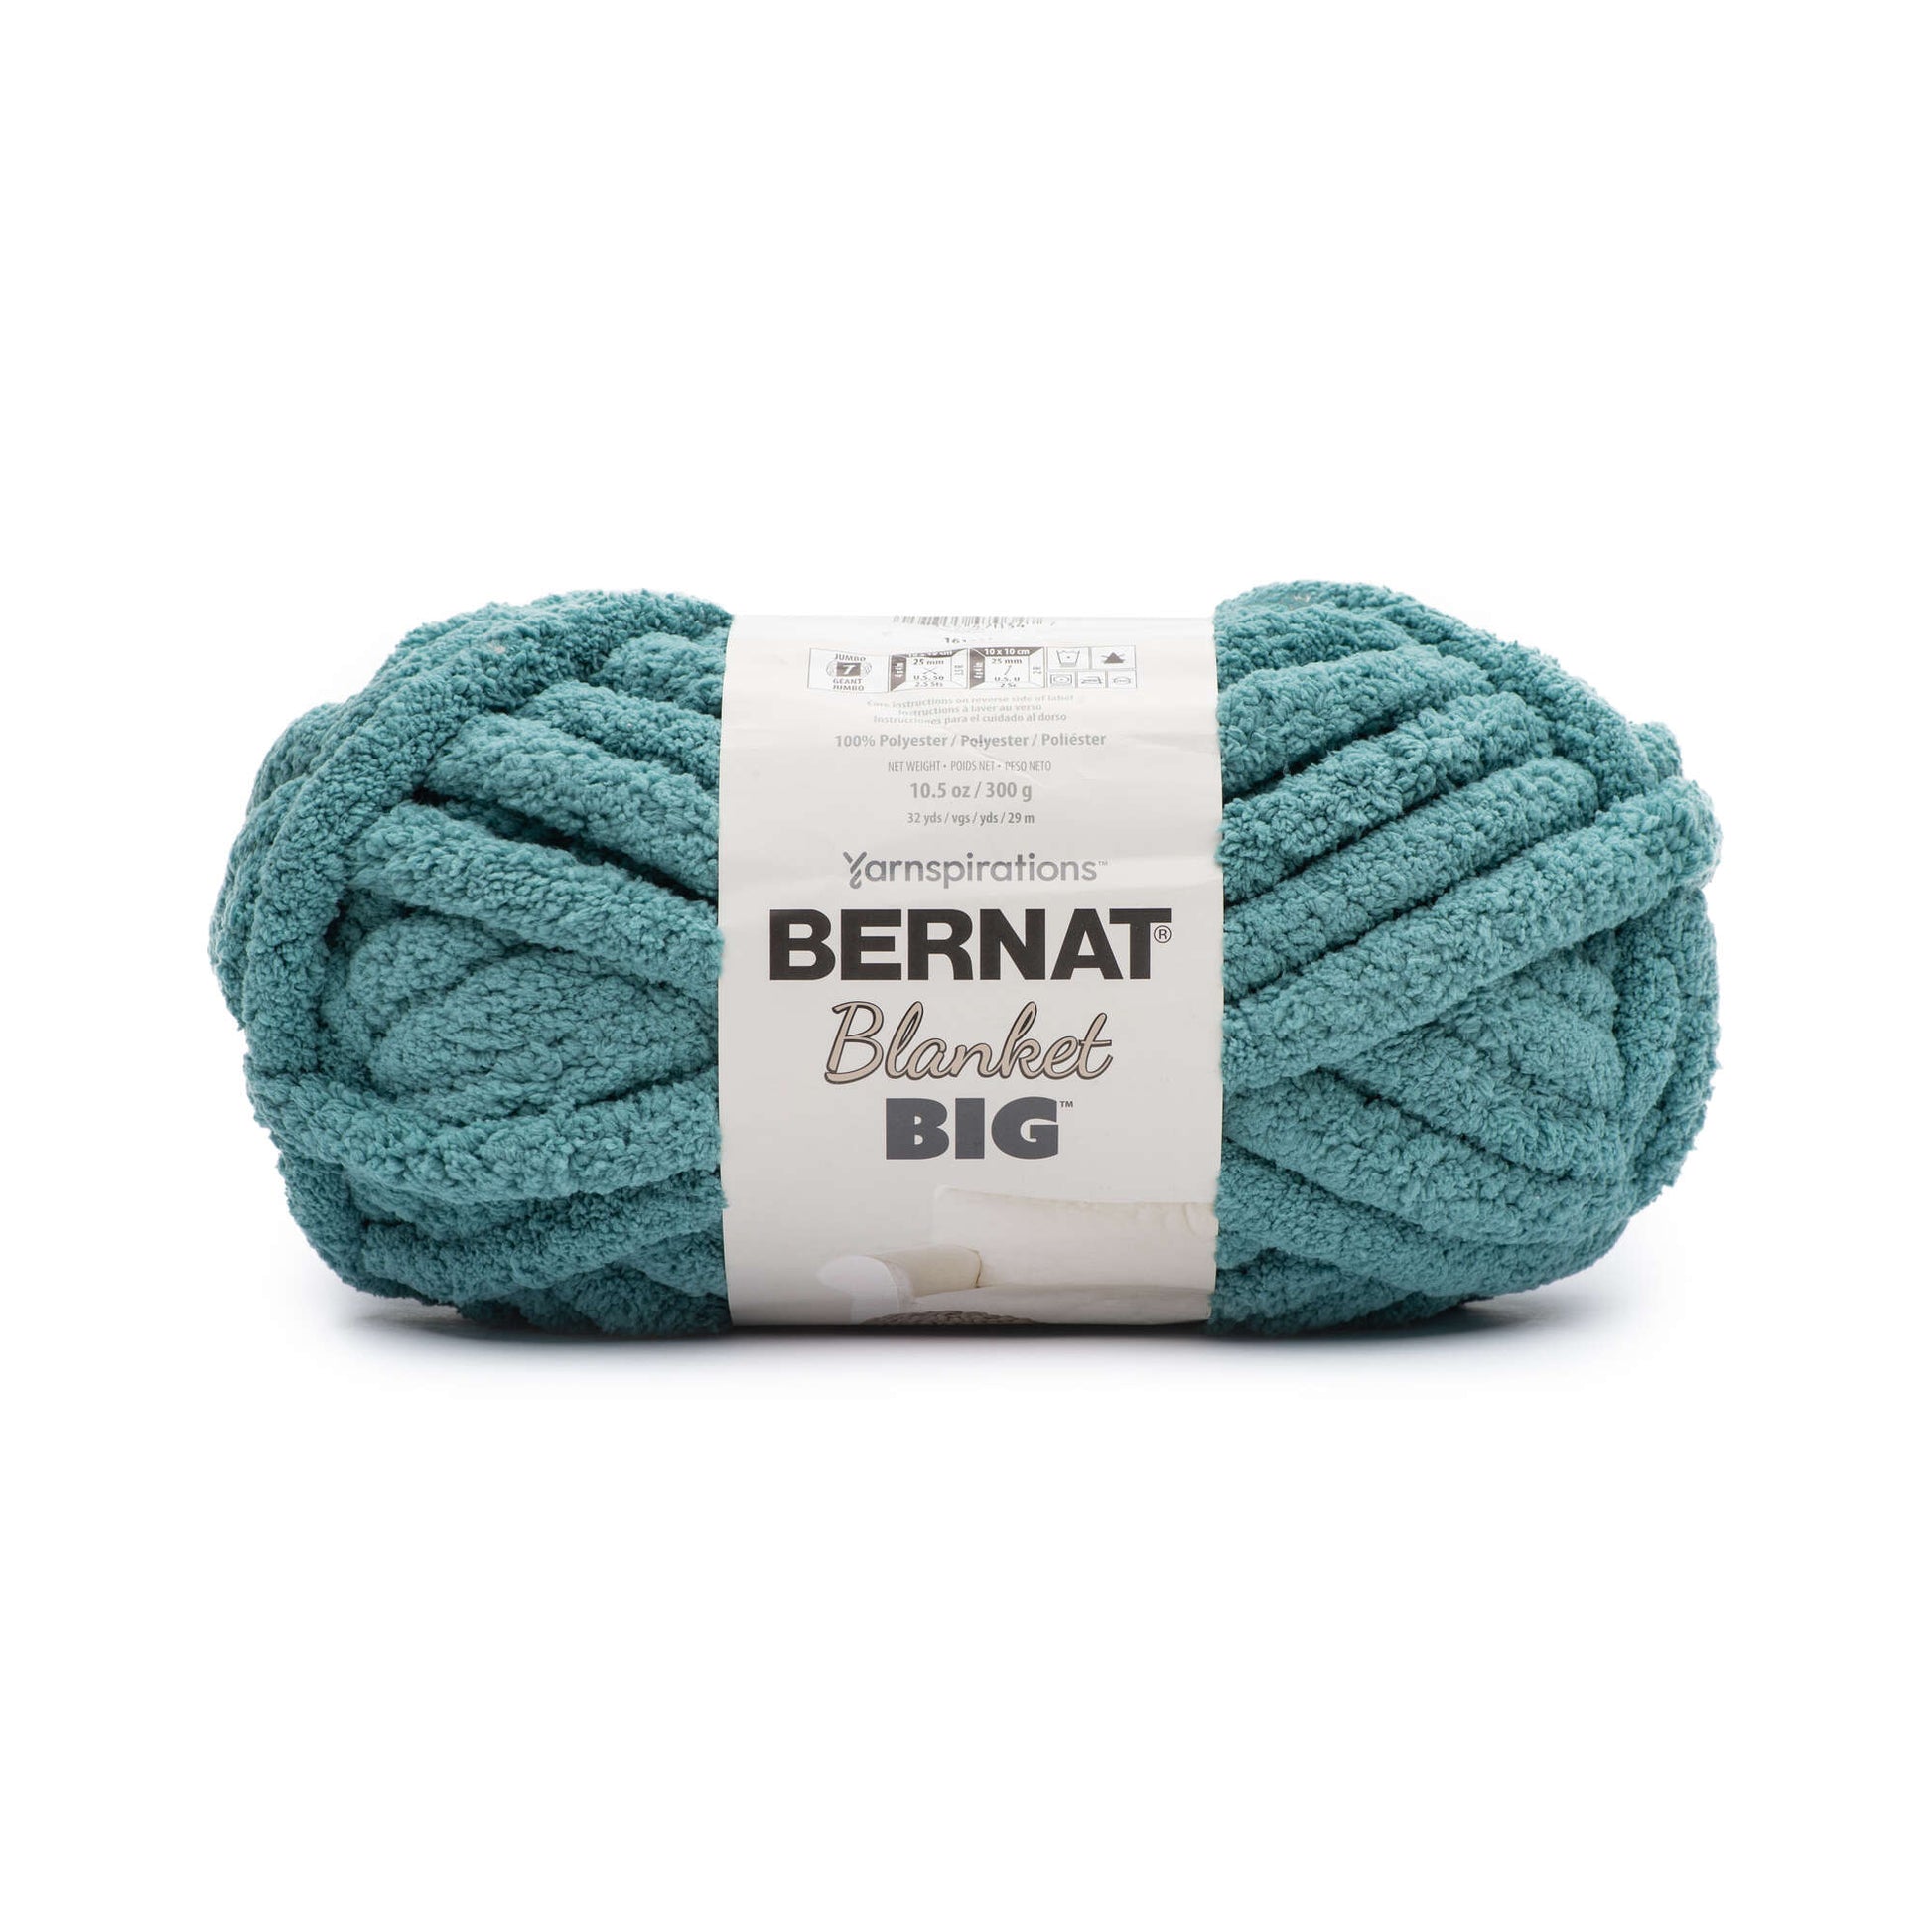 Bernat Blanket Big Yarn (300g/10.5oz) Frosted Green